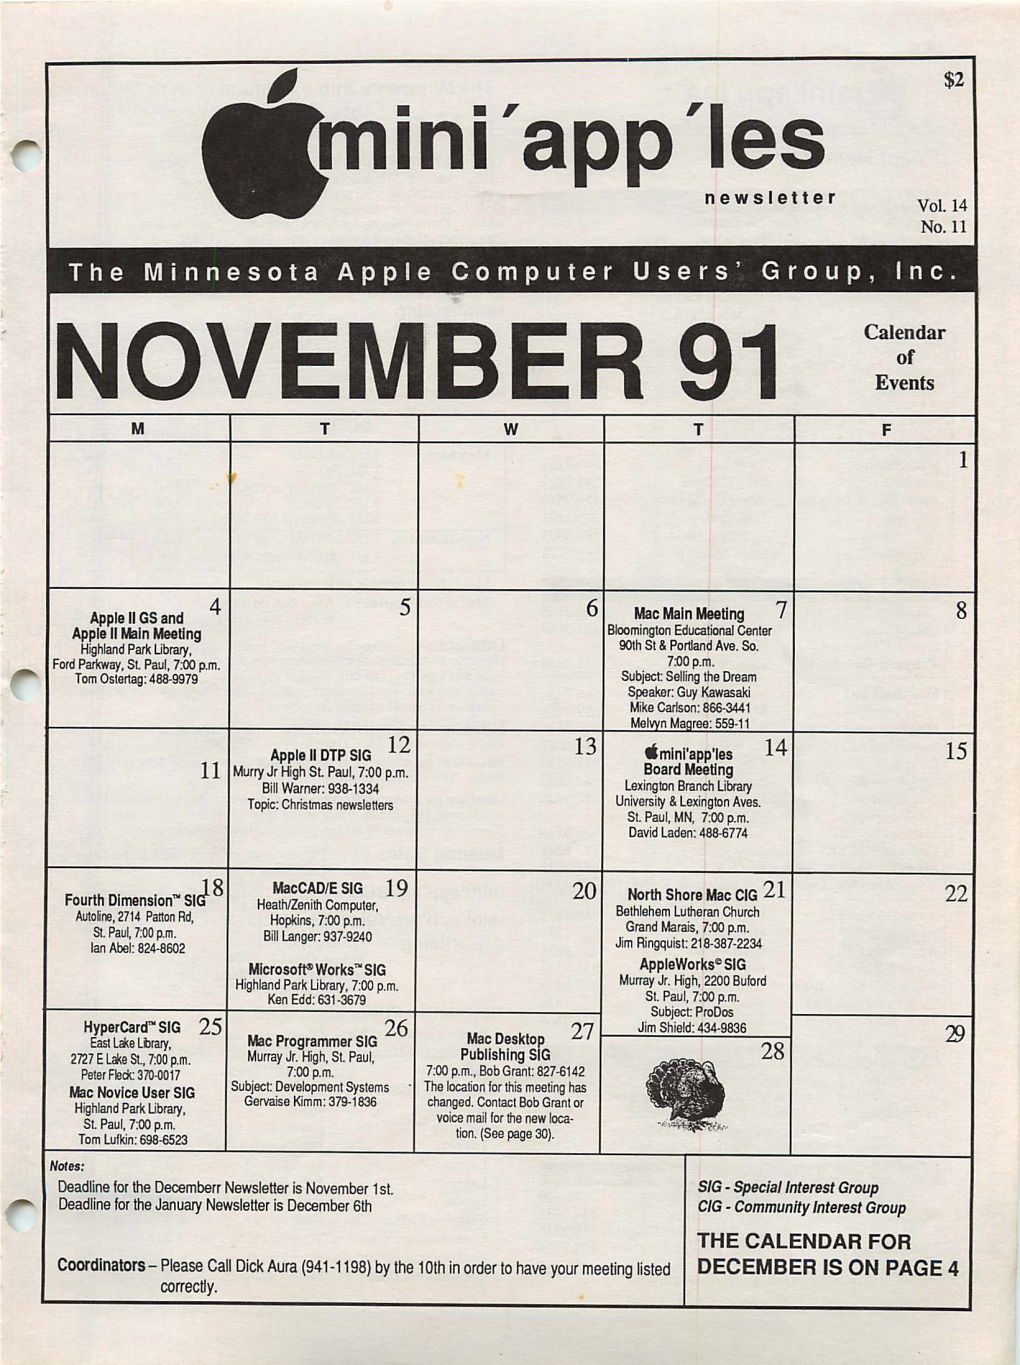 NOVEMBER 91 Calendar